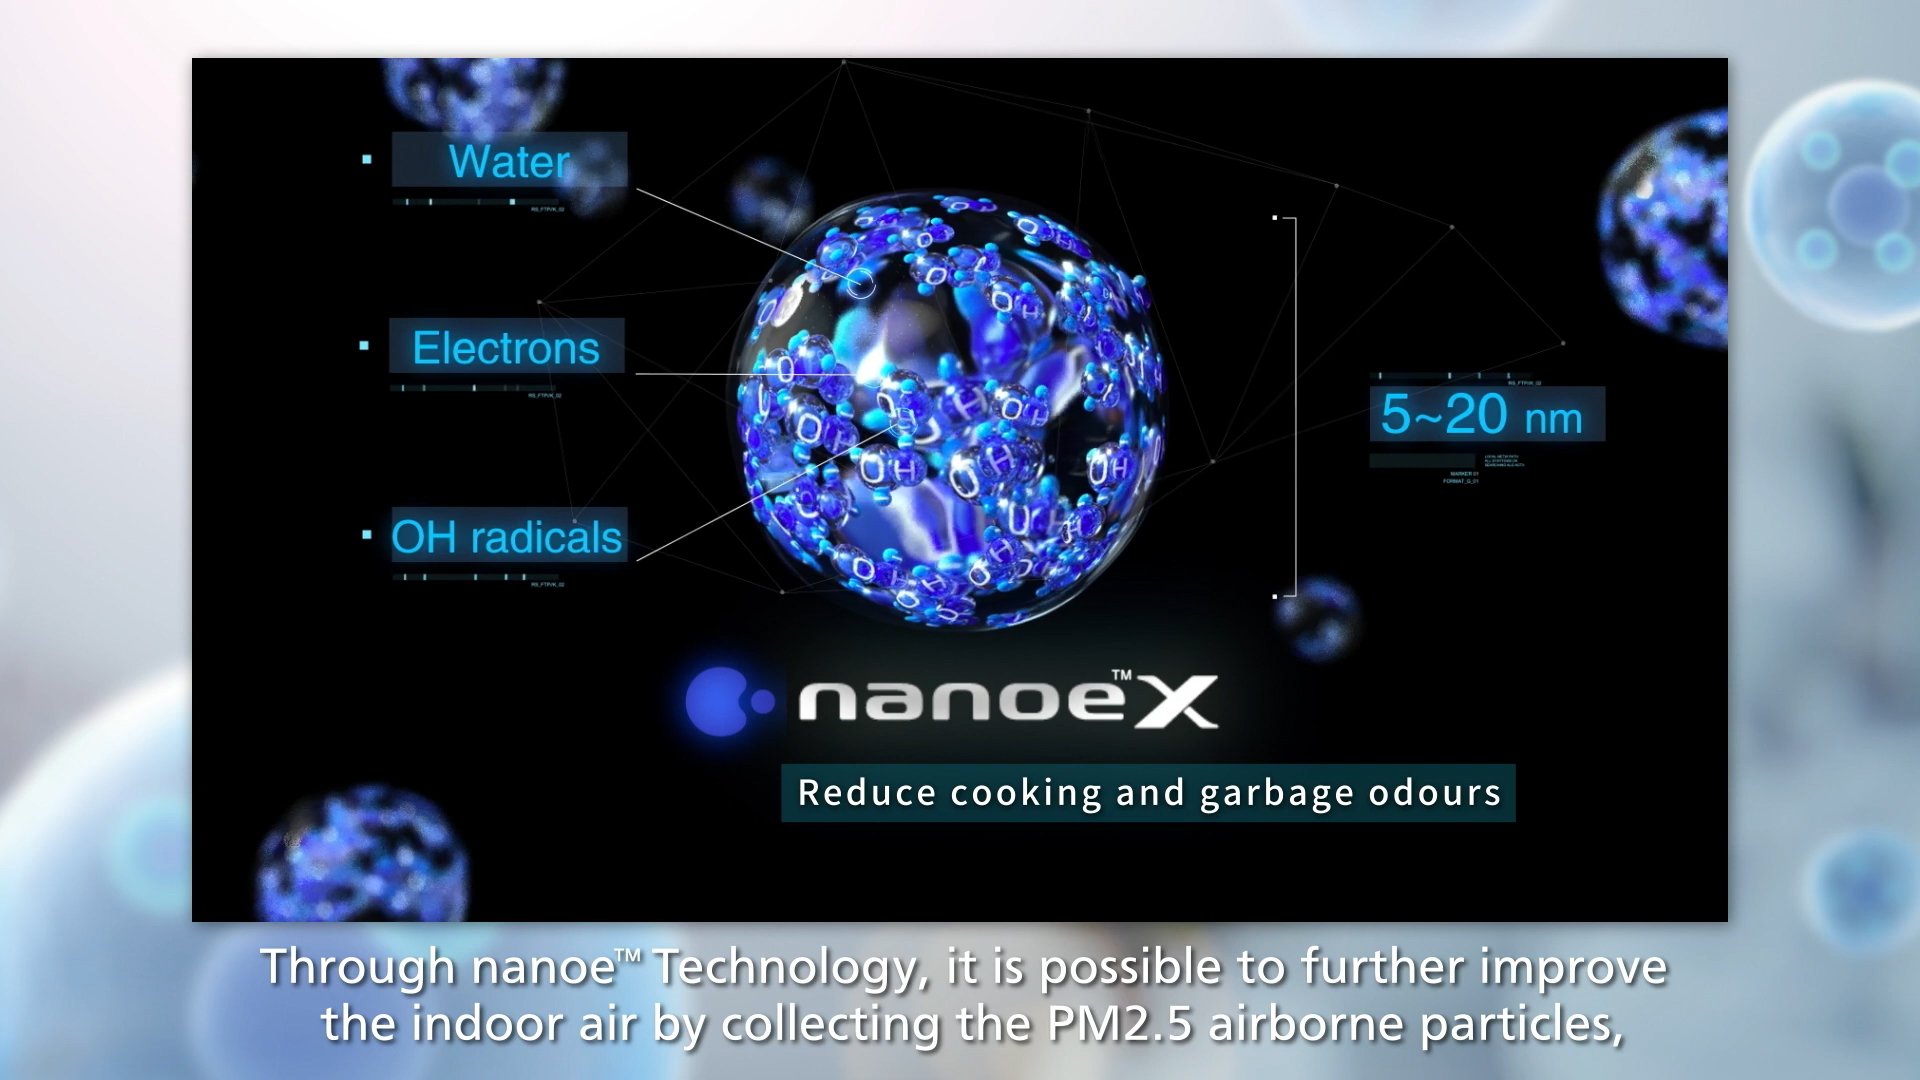 nanoe™ technology